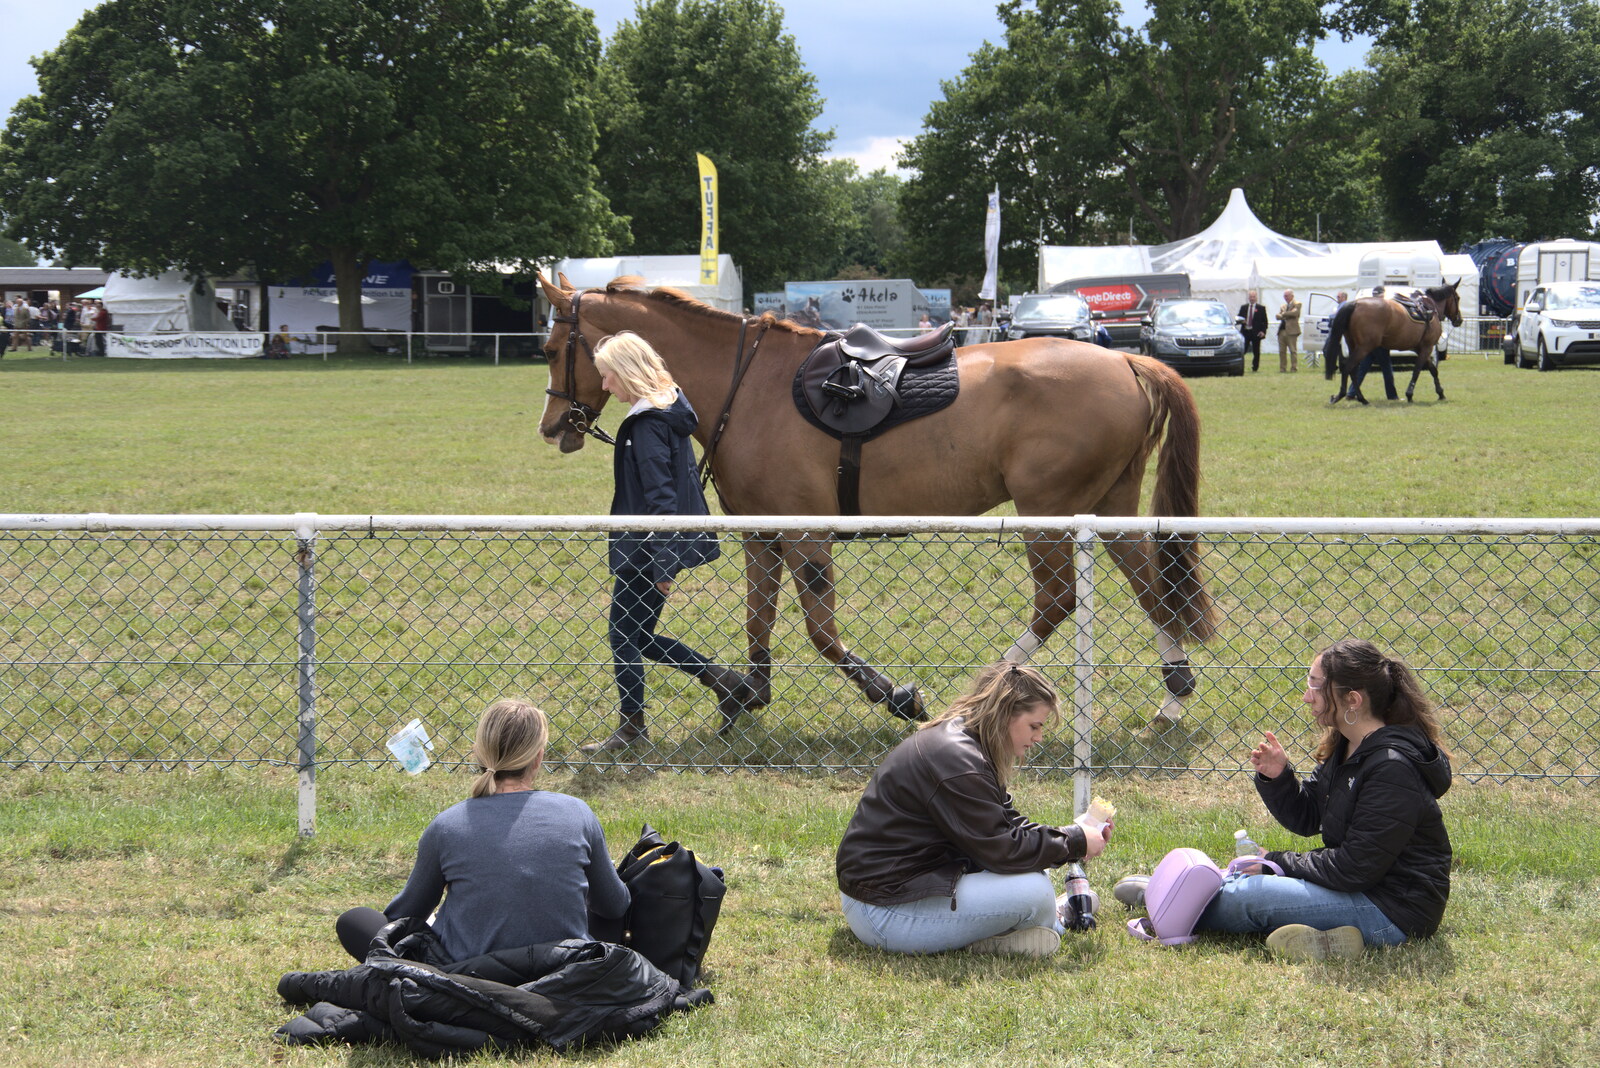 The Suffolk Show, Trinity Park, Ipswich - 1st June 2022: A horse gets walked around